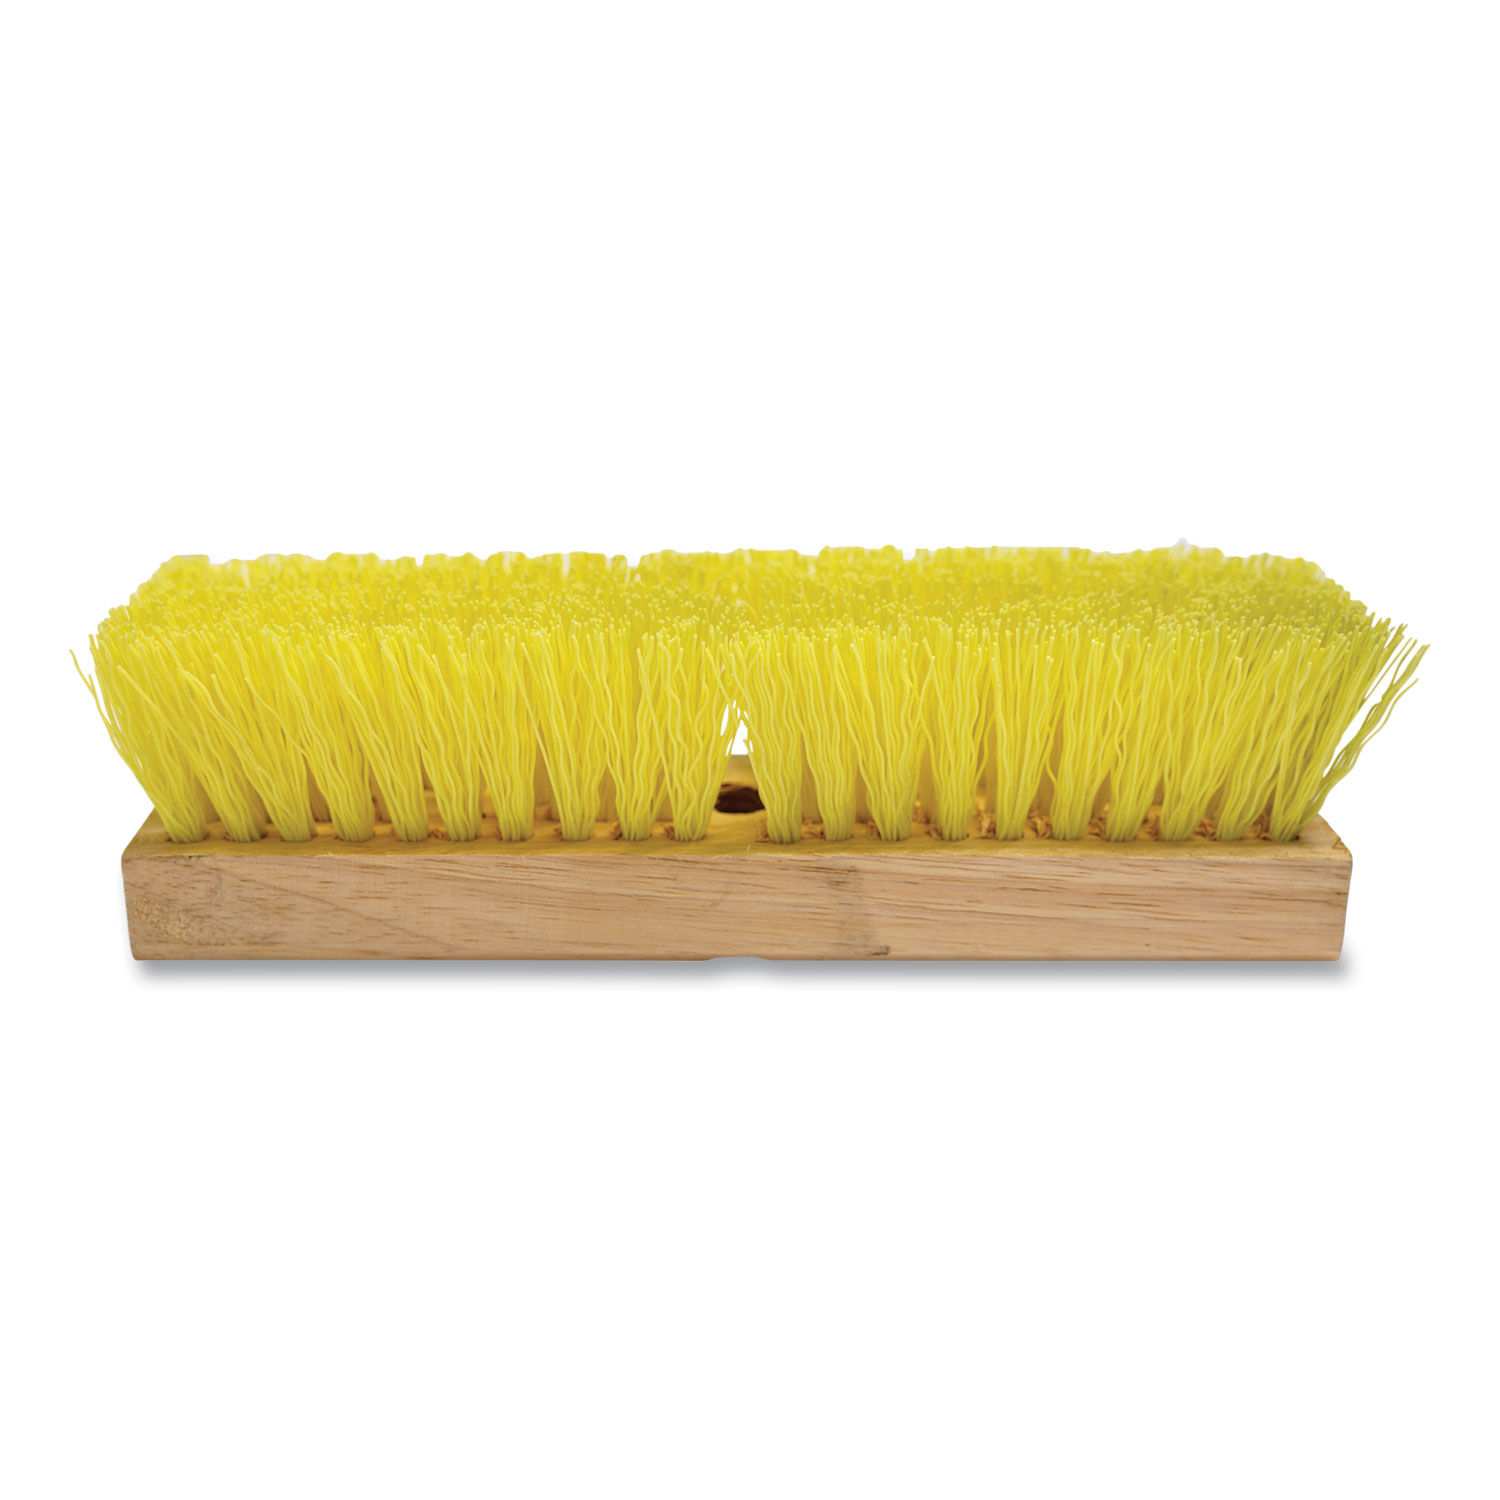 Deck Brush Cream Polypropylene Bristles, 10" Brush, Tan Hardwood Handle